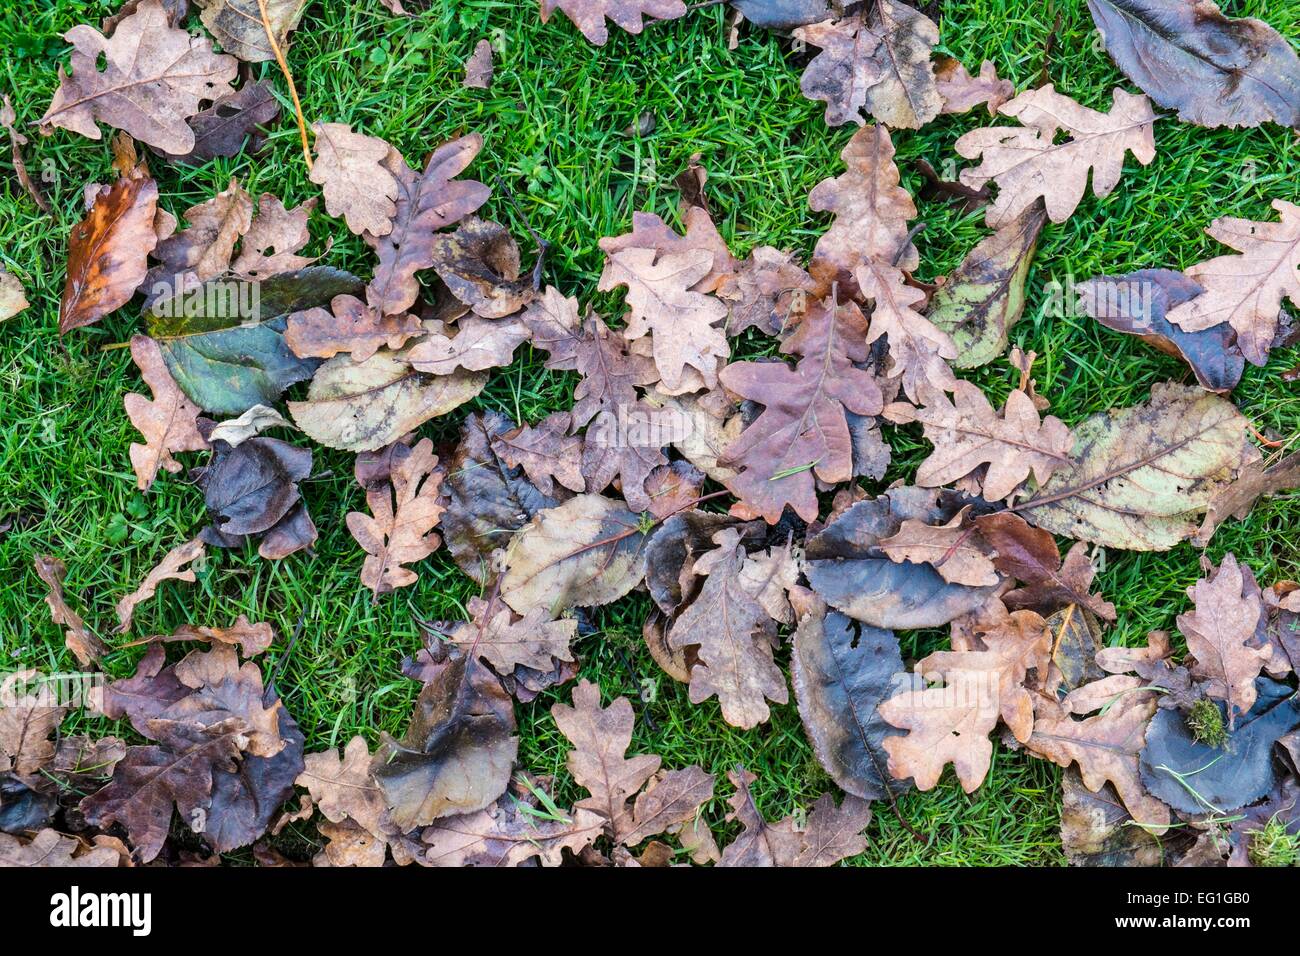 Fallen leaves on lawn Stock Photo